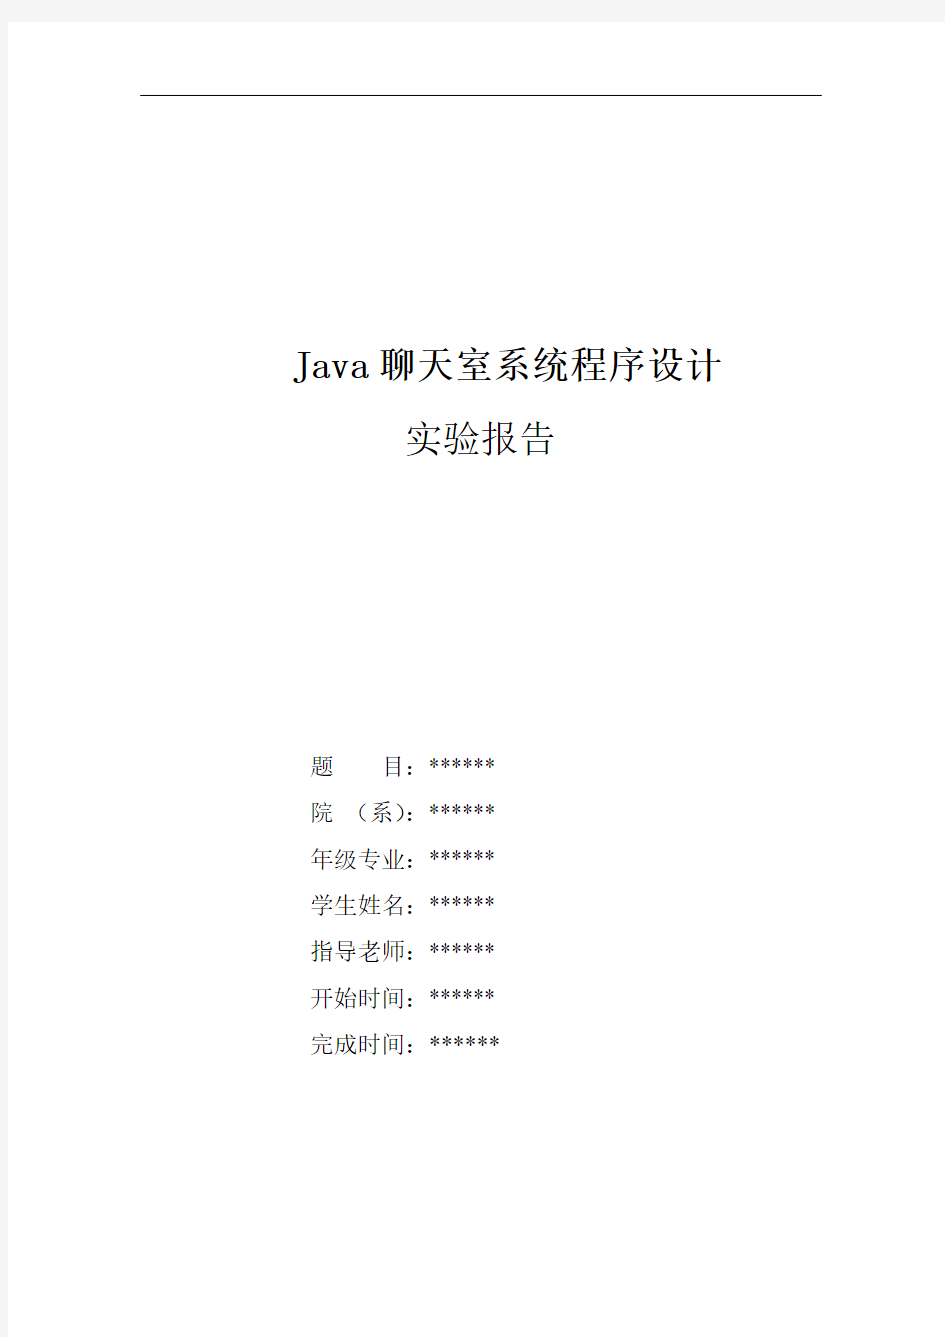 Java聊天室系统程序设计实验报告